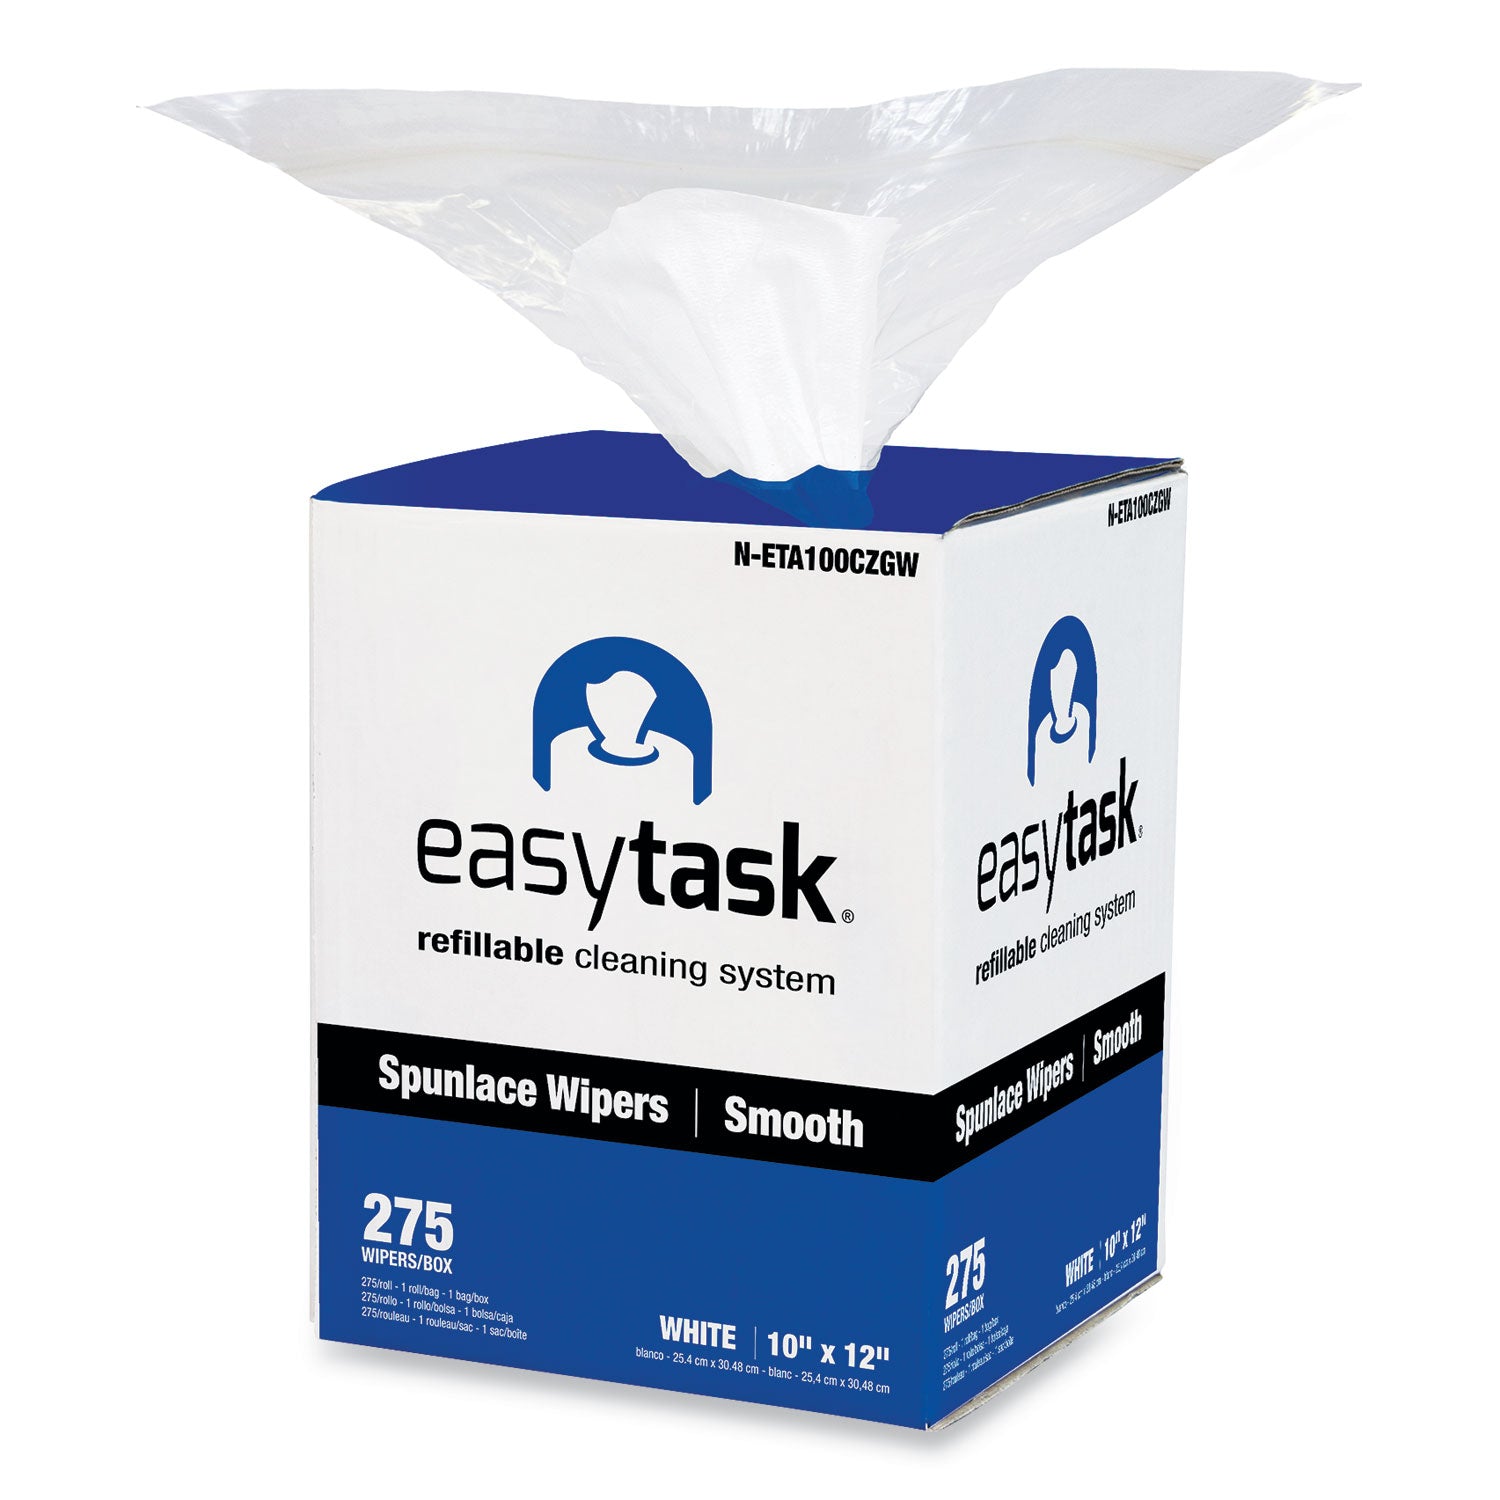 easy-task-a100-wiper-center-pull-1-ply-10-x-12-white-275-sheets-roll-with-zipper-bag_hosneta100czgw - 1